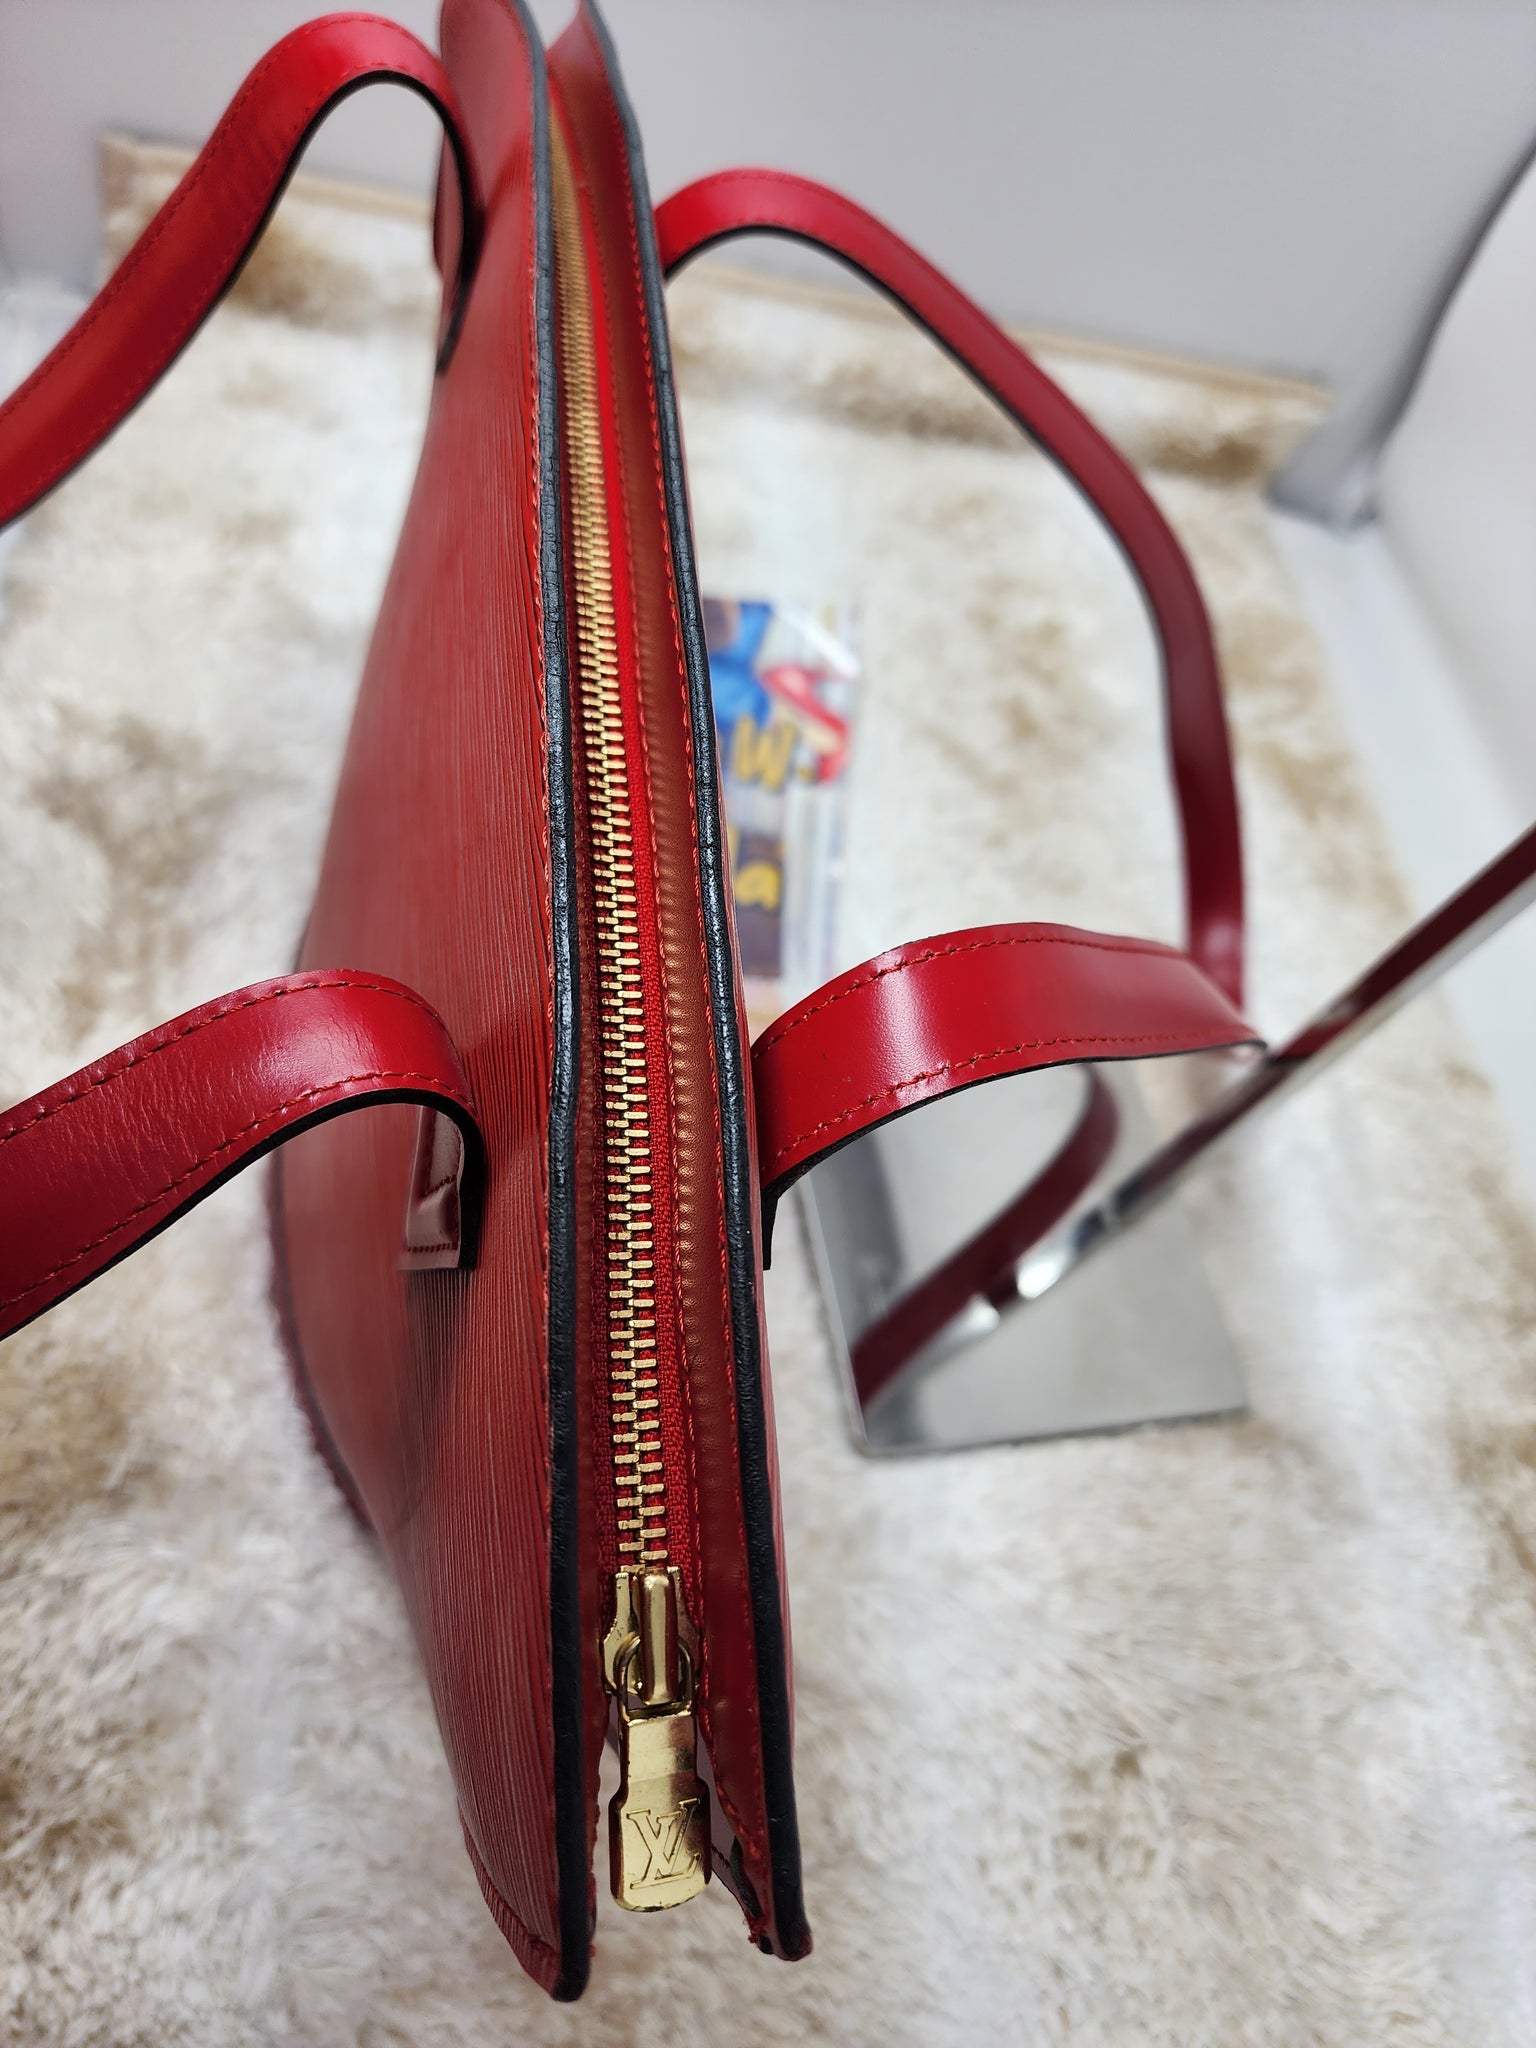 Shop for Louis Vuitton Red Epi Leather Lussac Shoulder Bag